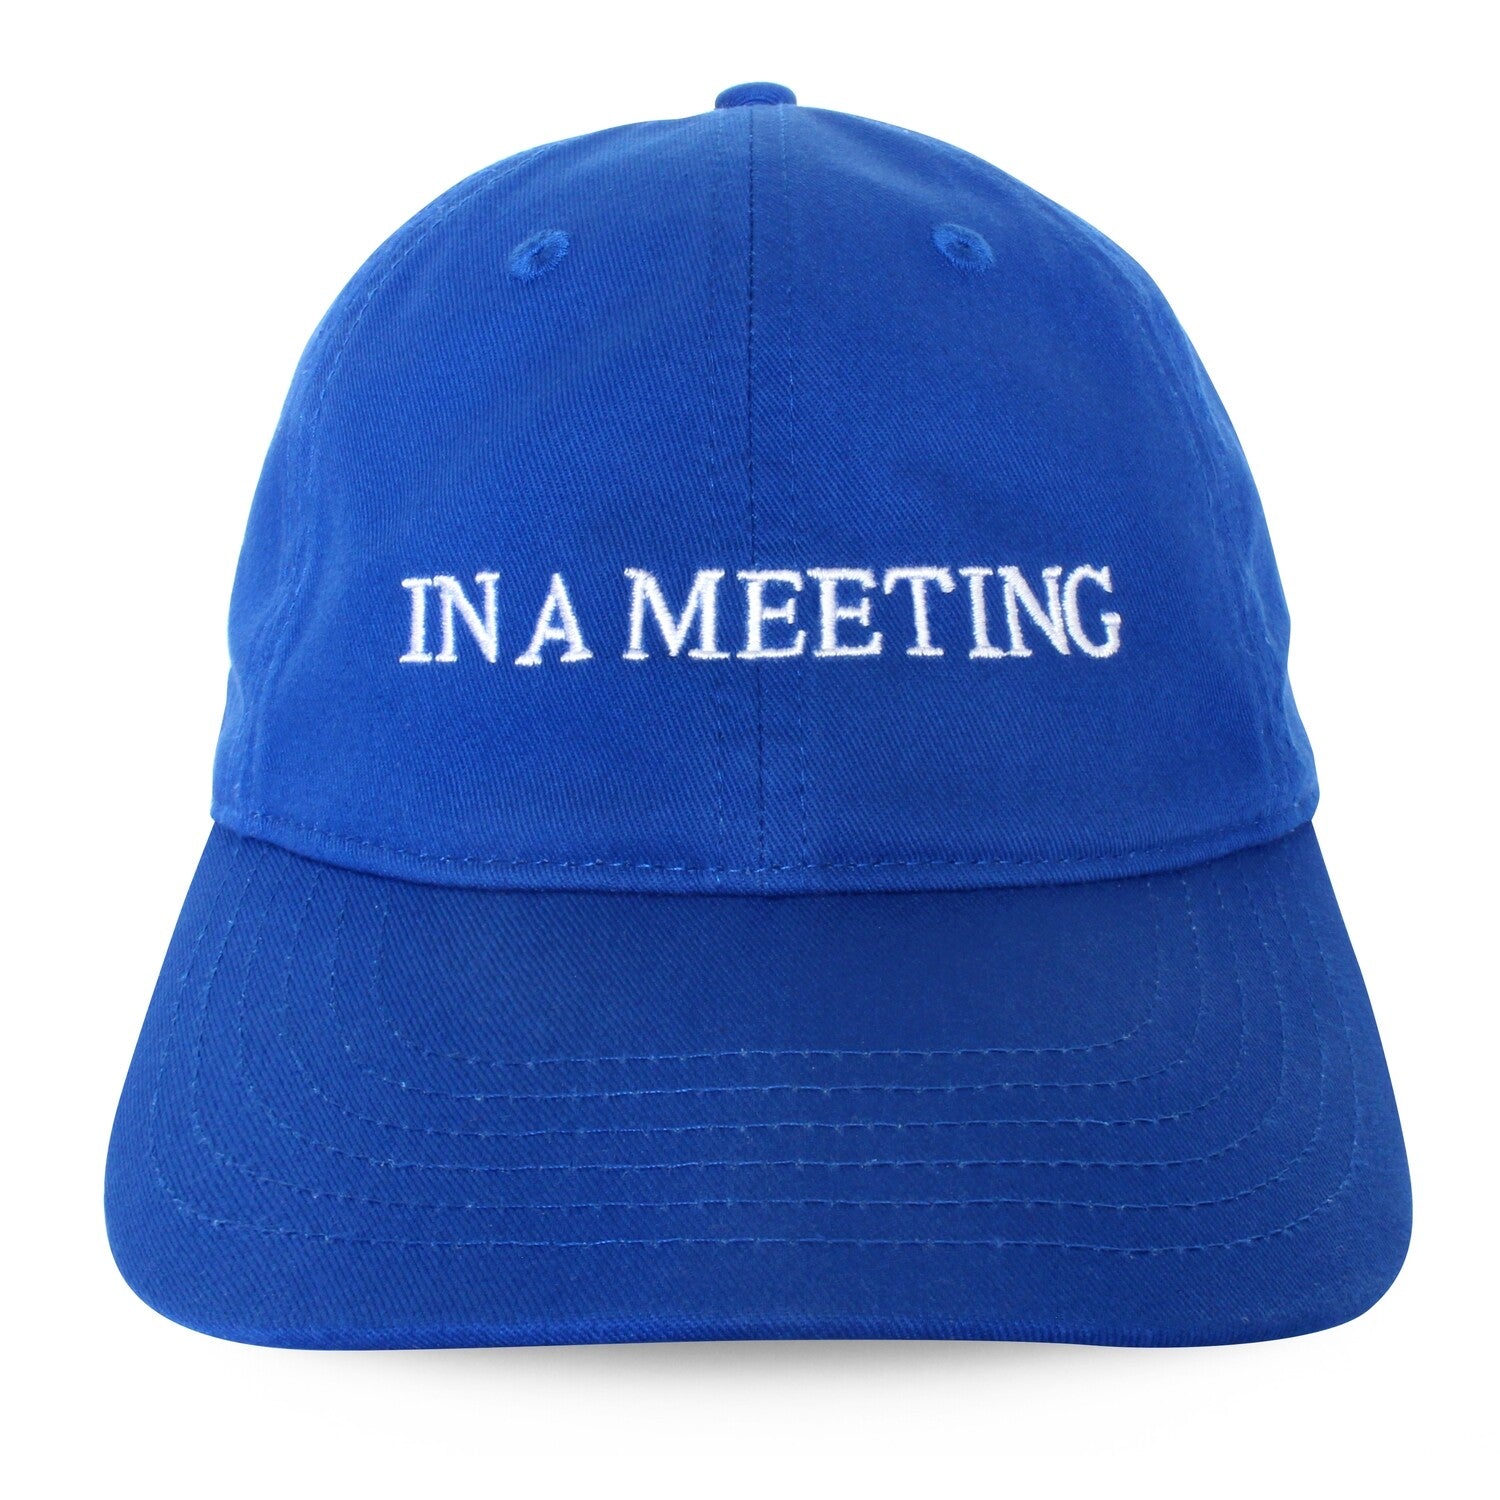 Cap - In a Meeting- royal blue